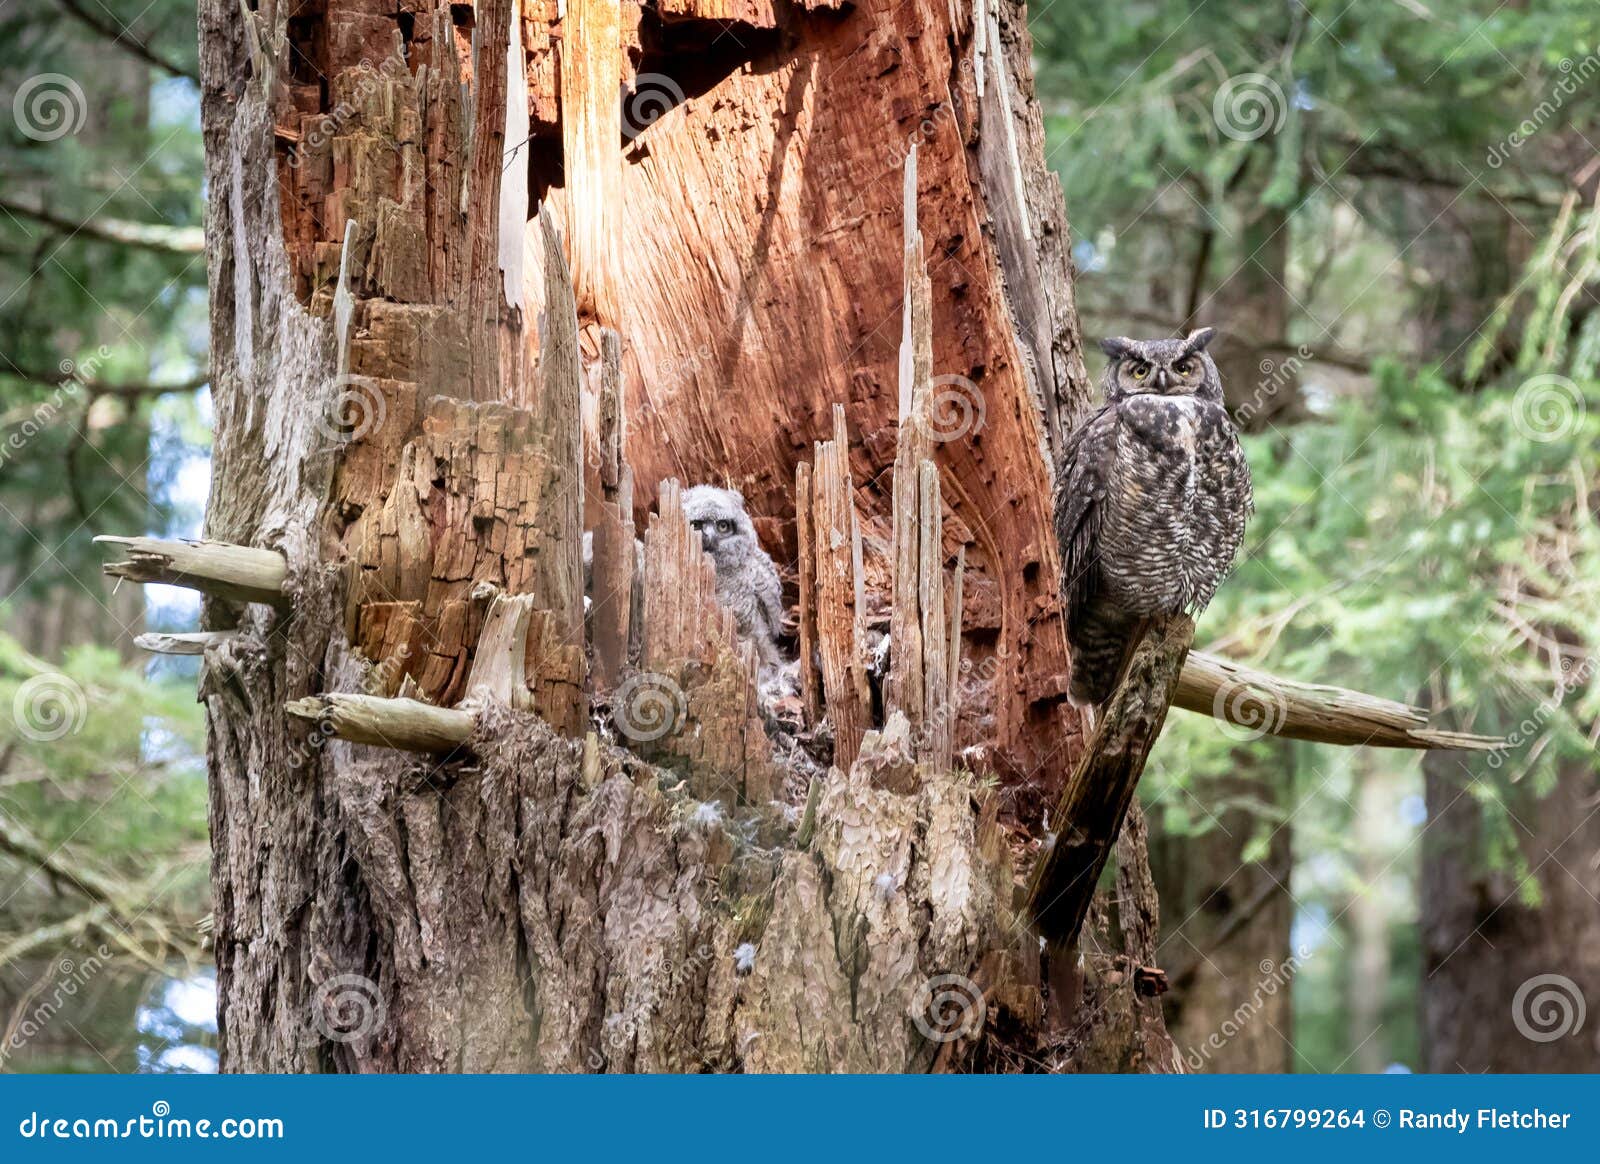 great horned owl  bubo virginianus 